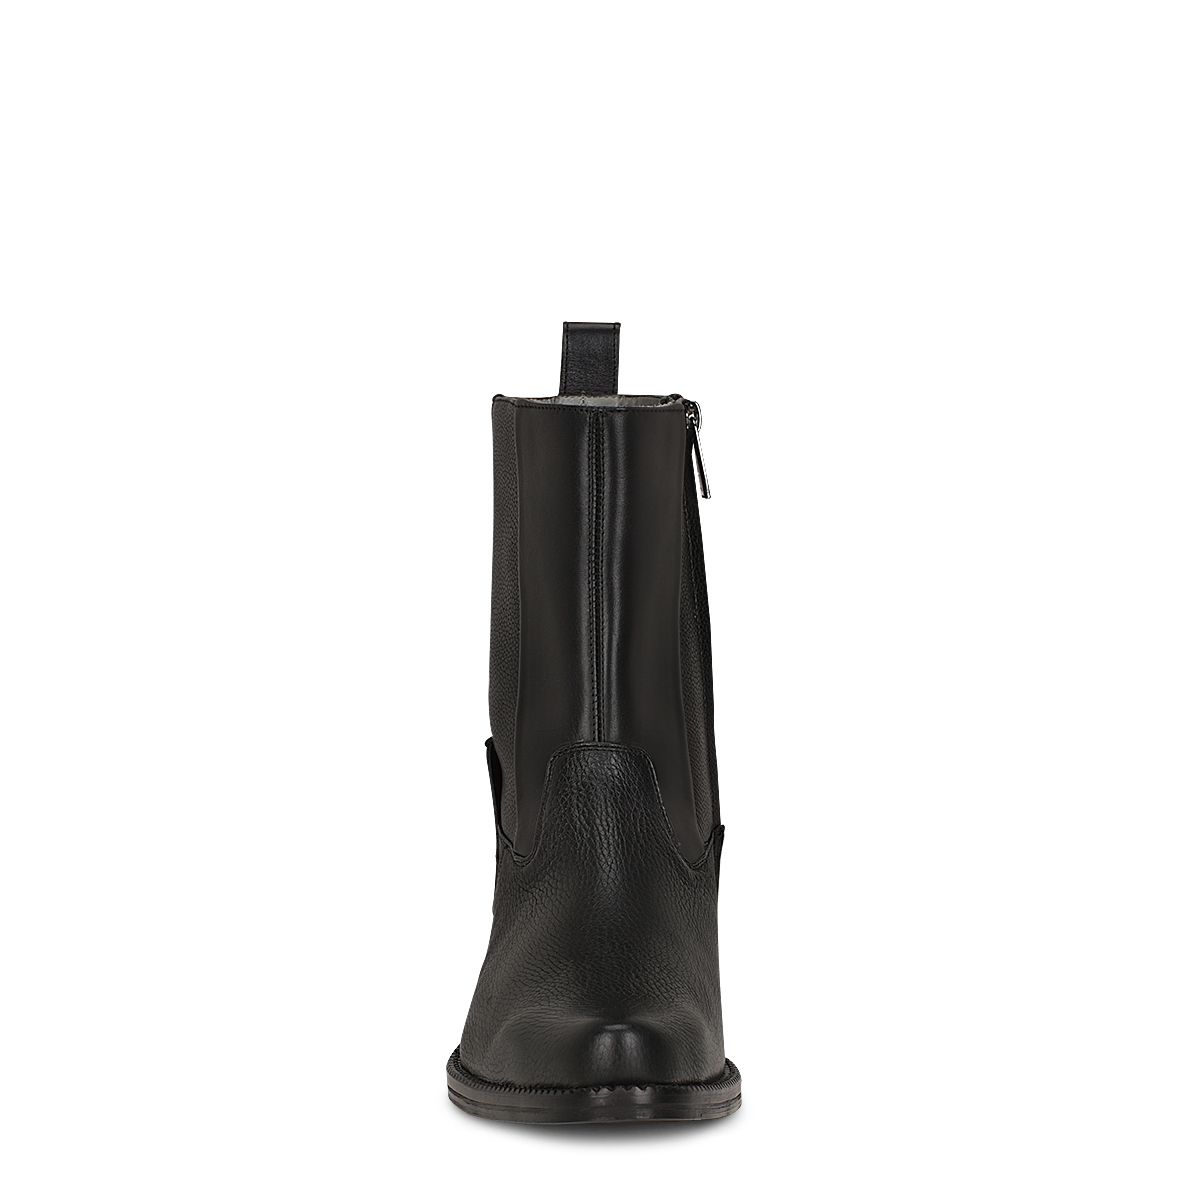 Black deer leather boots, Hand-painted - 828VNTS - Cuadra Shop